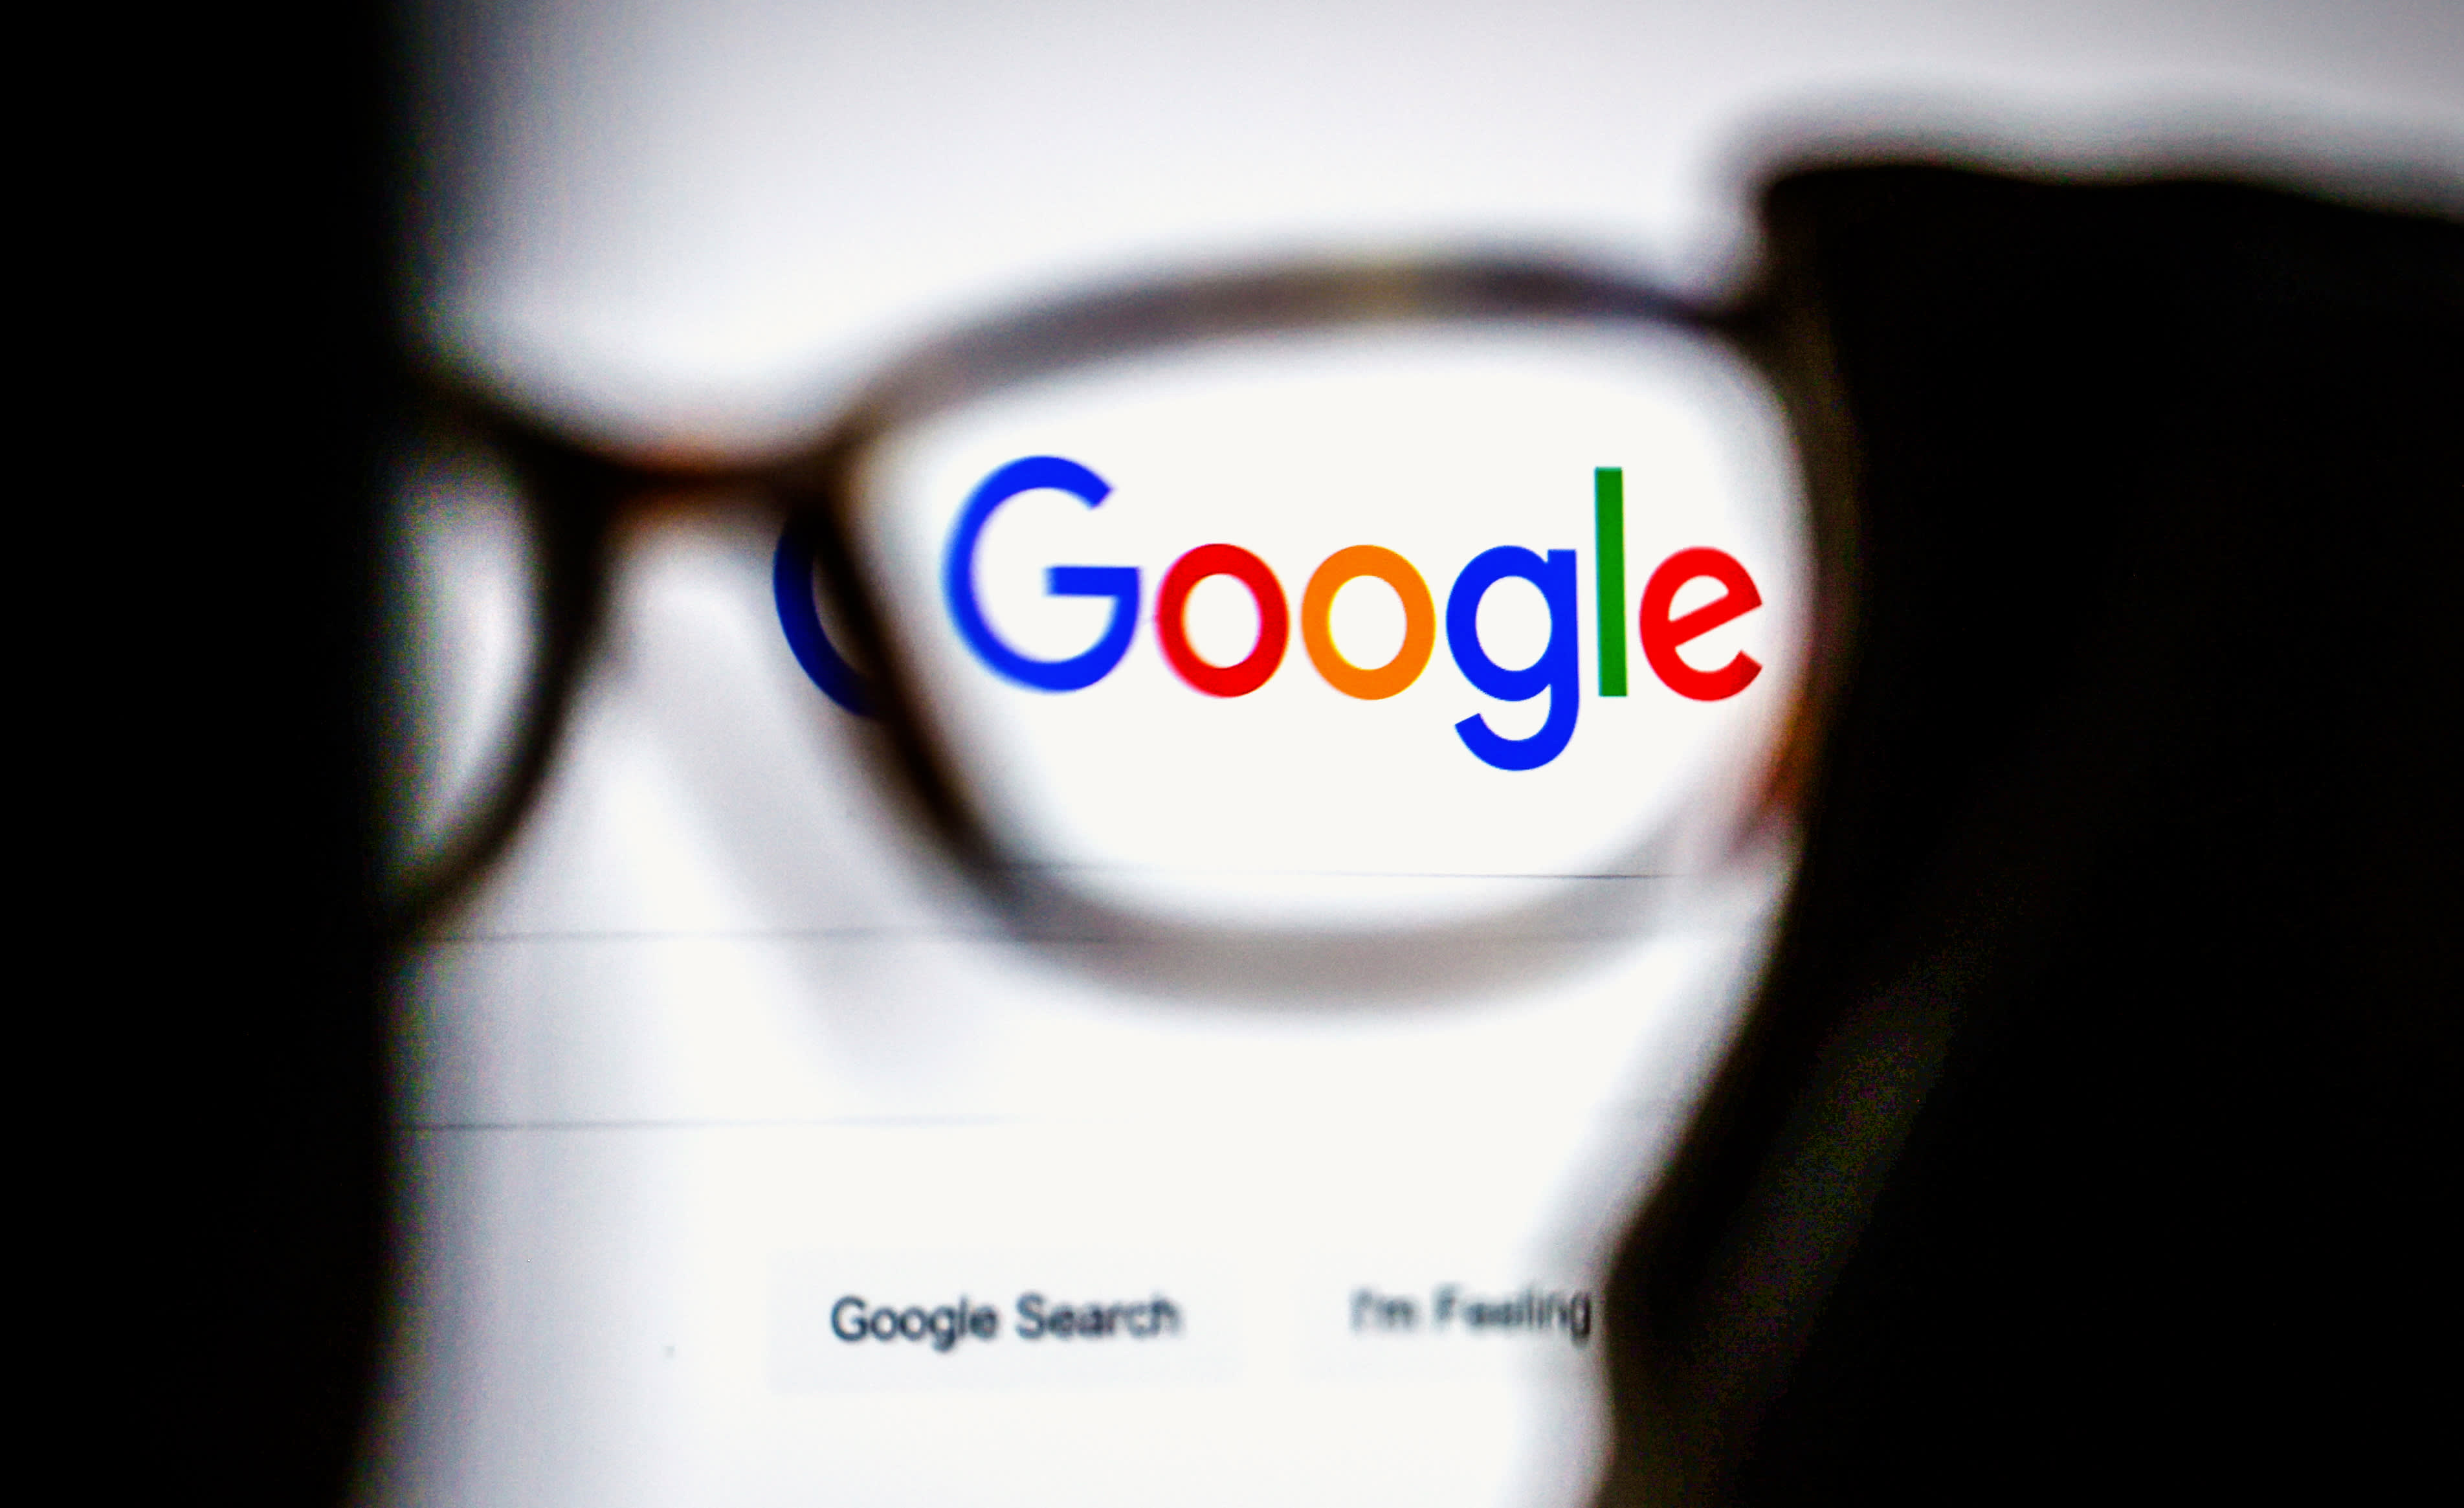 South Korea’s antitrust regulator fines Google 7 million